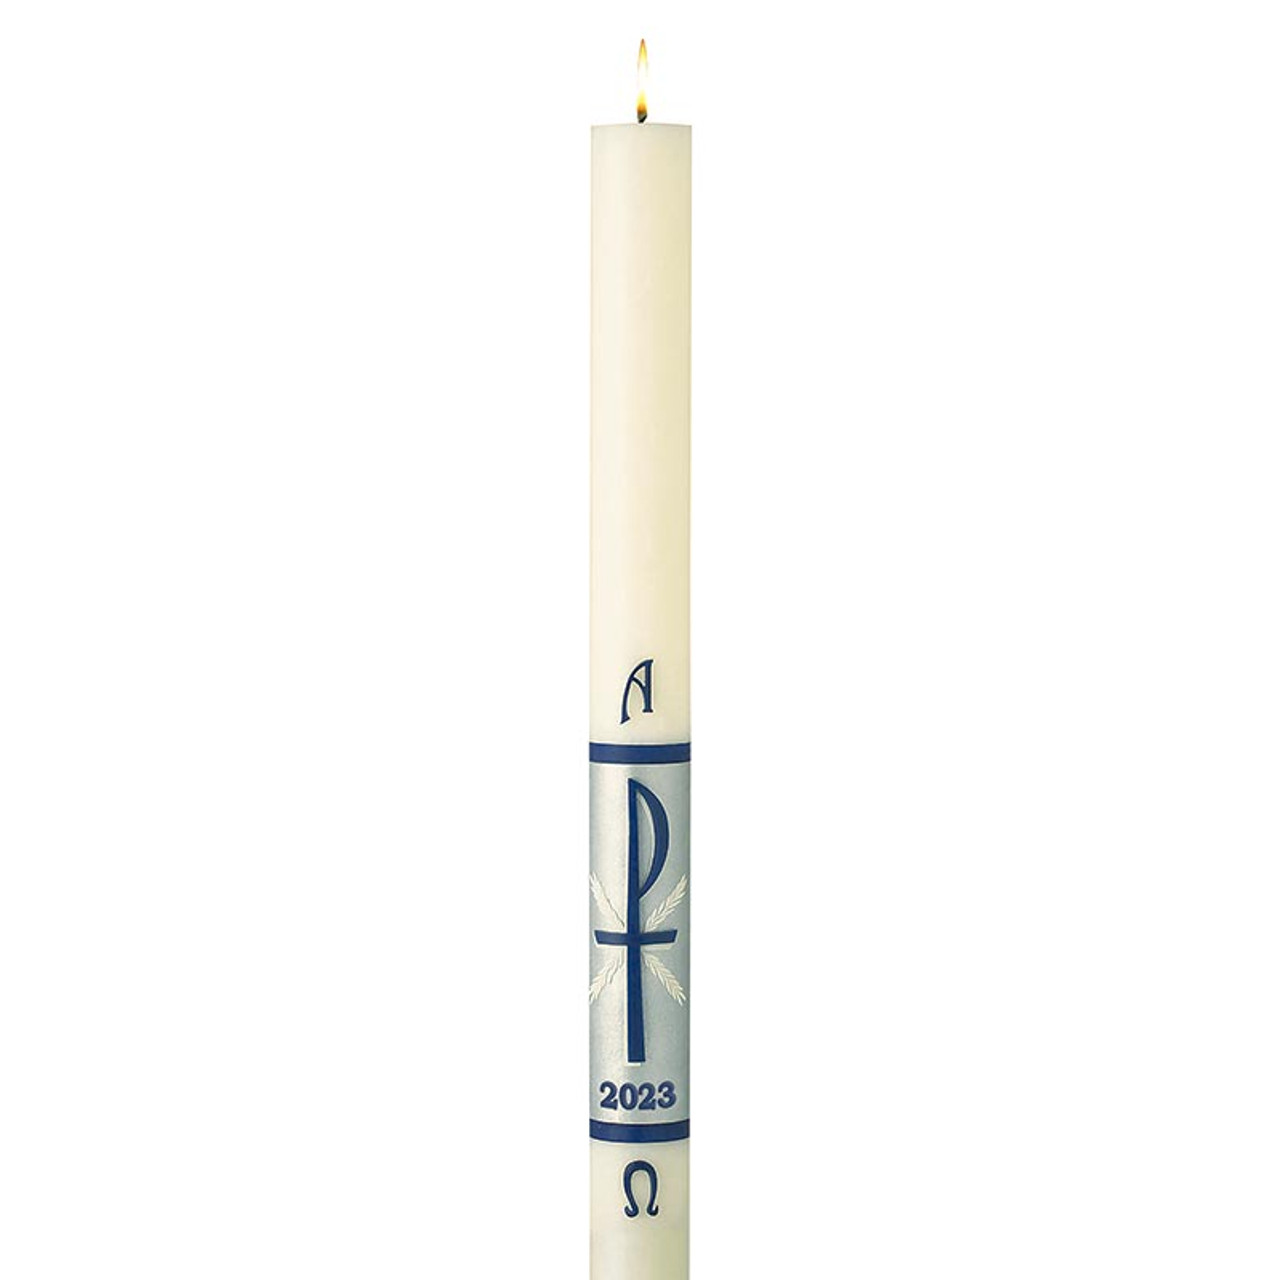 Eve nakke udtale Divine Light Wax Relief Paschal Candle - No 10 - Autom